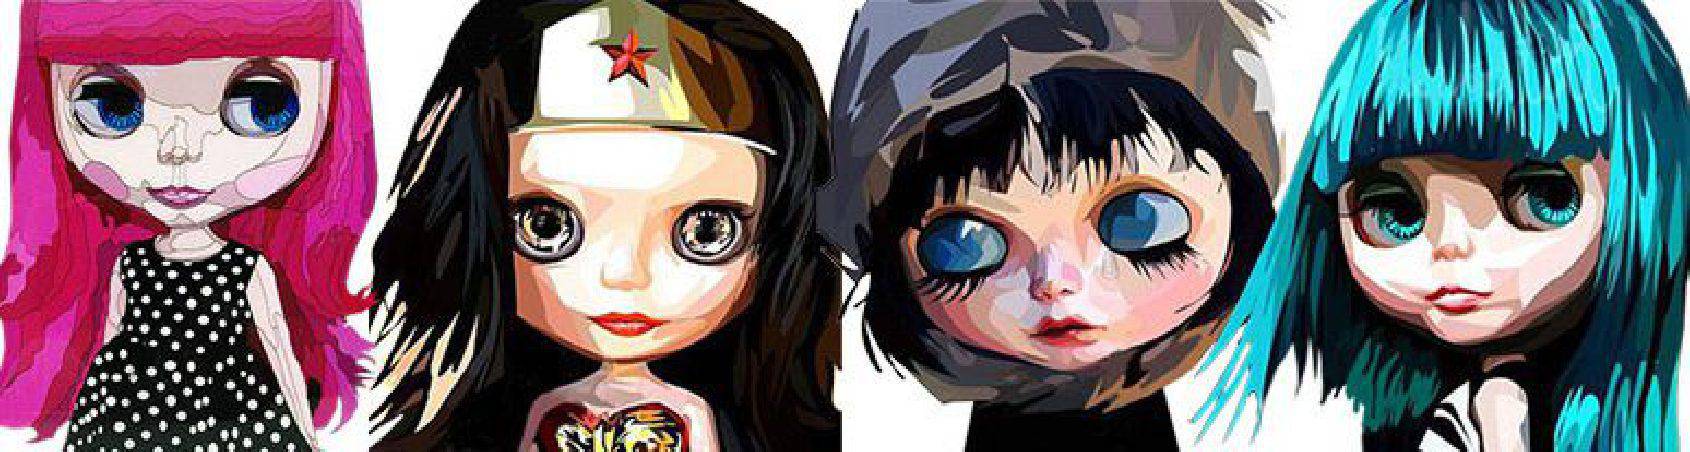 Pop-Art style paintings: comic & cartoon - Blythe dolls